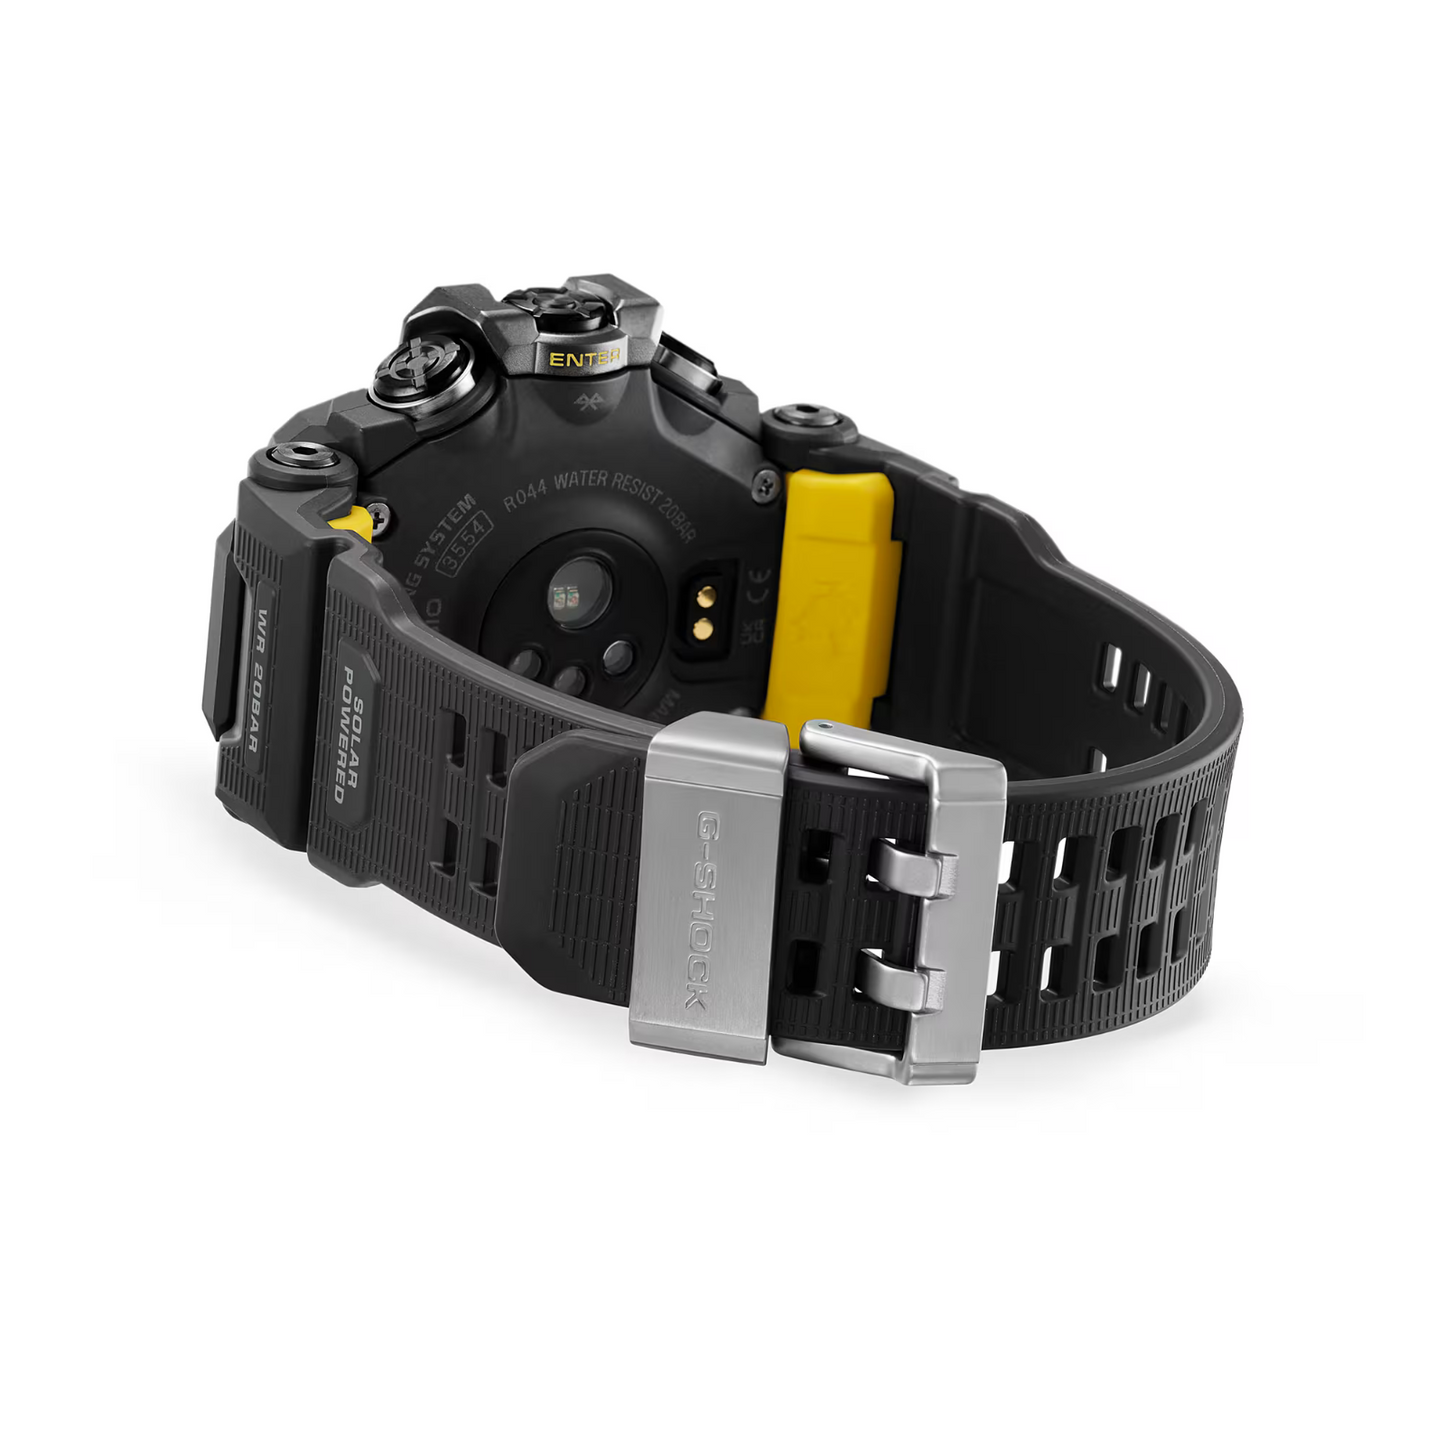 Casio G-Shock Rangeman Resin Solar Heart Rate Monitor Black Watch GPR-H1000-1